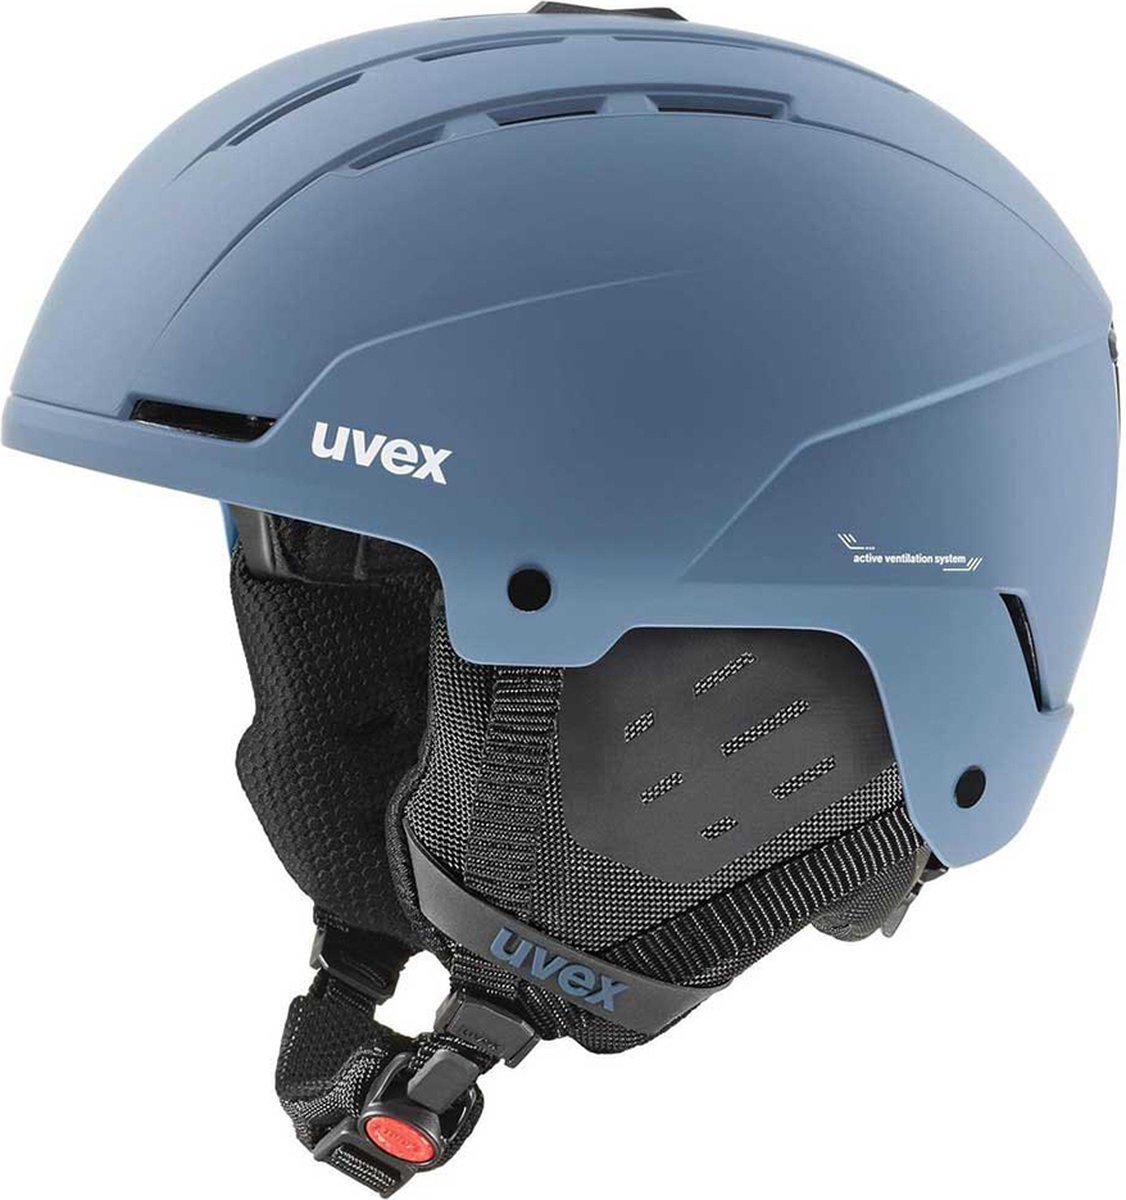 Uvex skihelm Stance Blauw - Maat 54-58